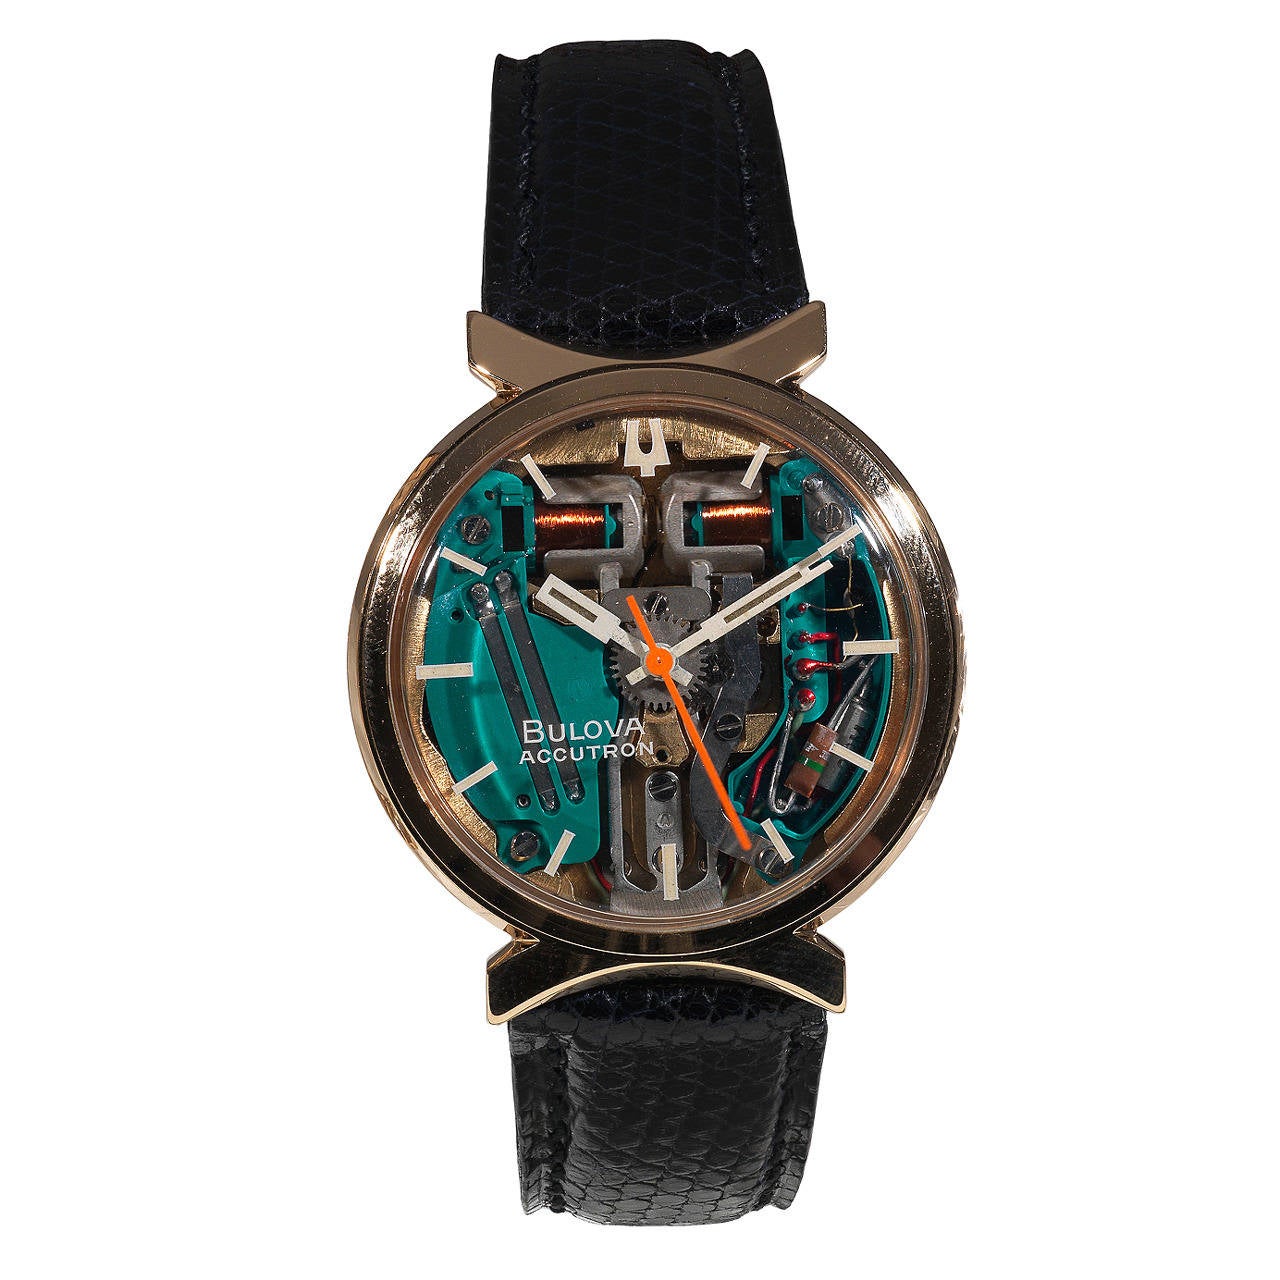 Bulova Rose Gold Accutron Wristwatch circa 1970s